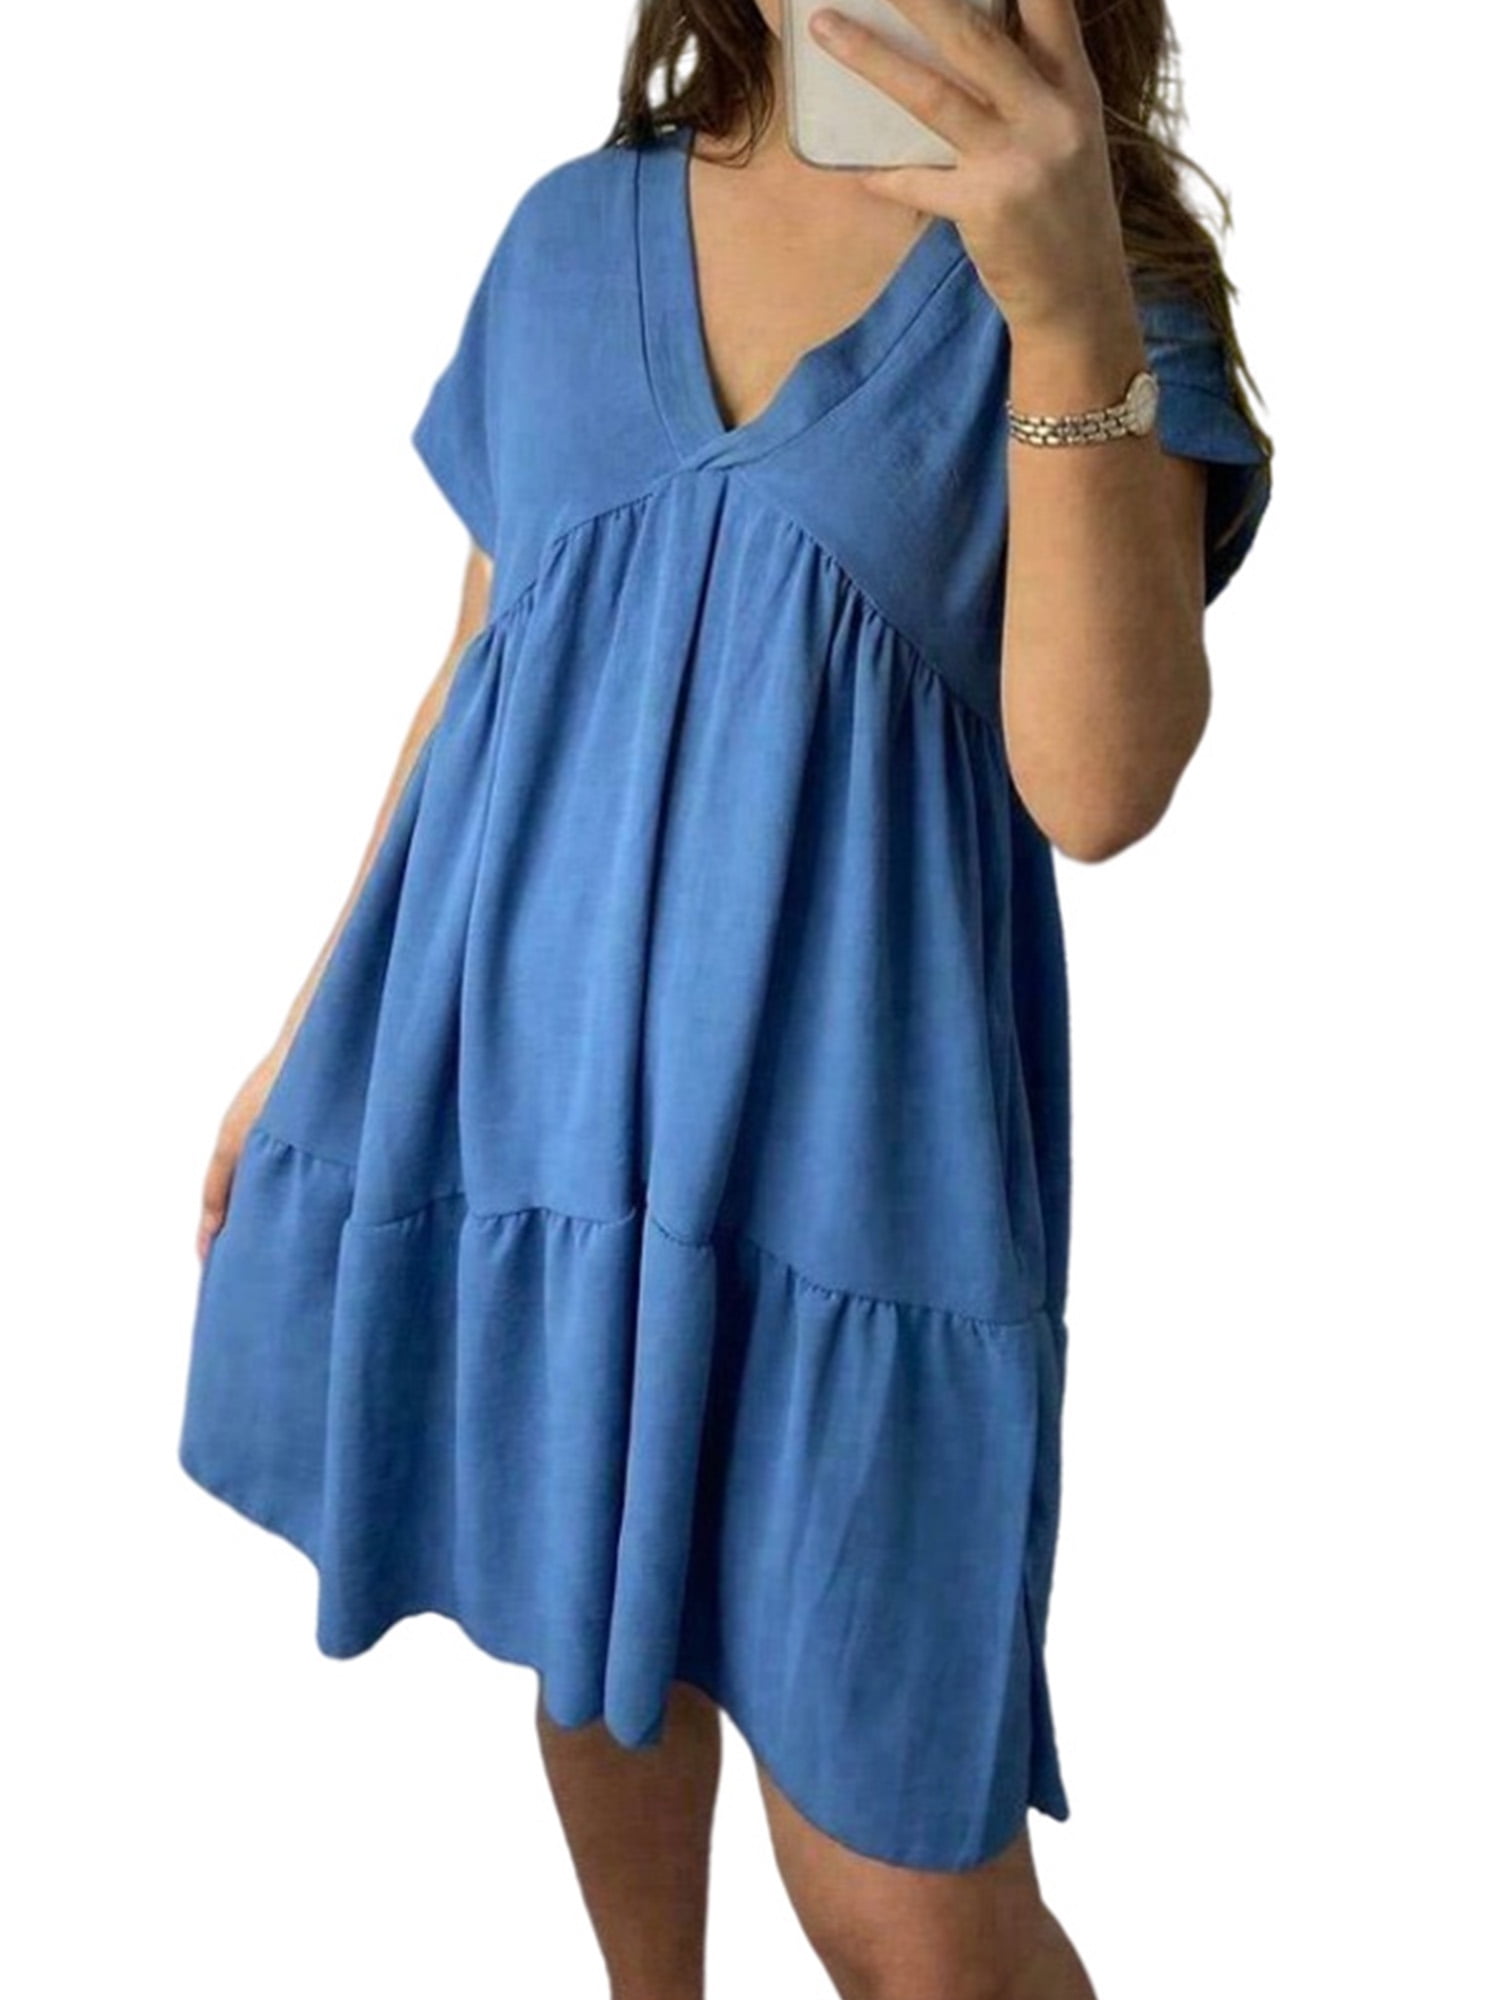 iLUGU V Neck Short Sleeve Maxi Dress For Women Solid Color A-Line Empire Line Holiday Dresses For Women